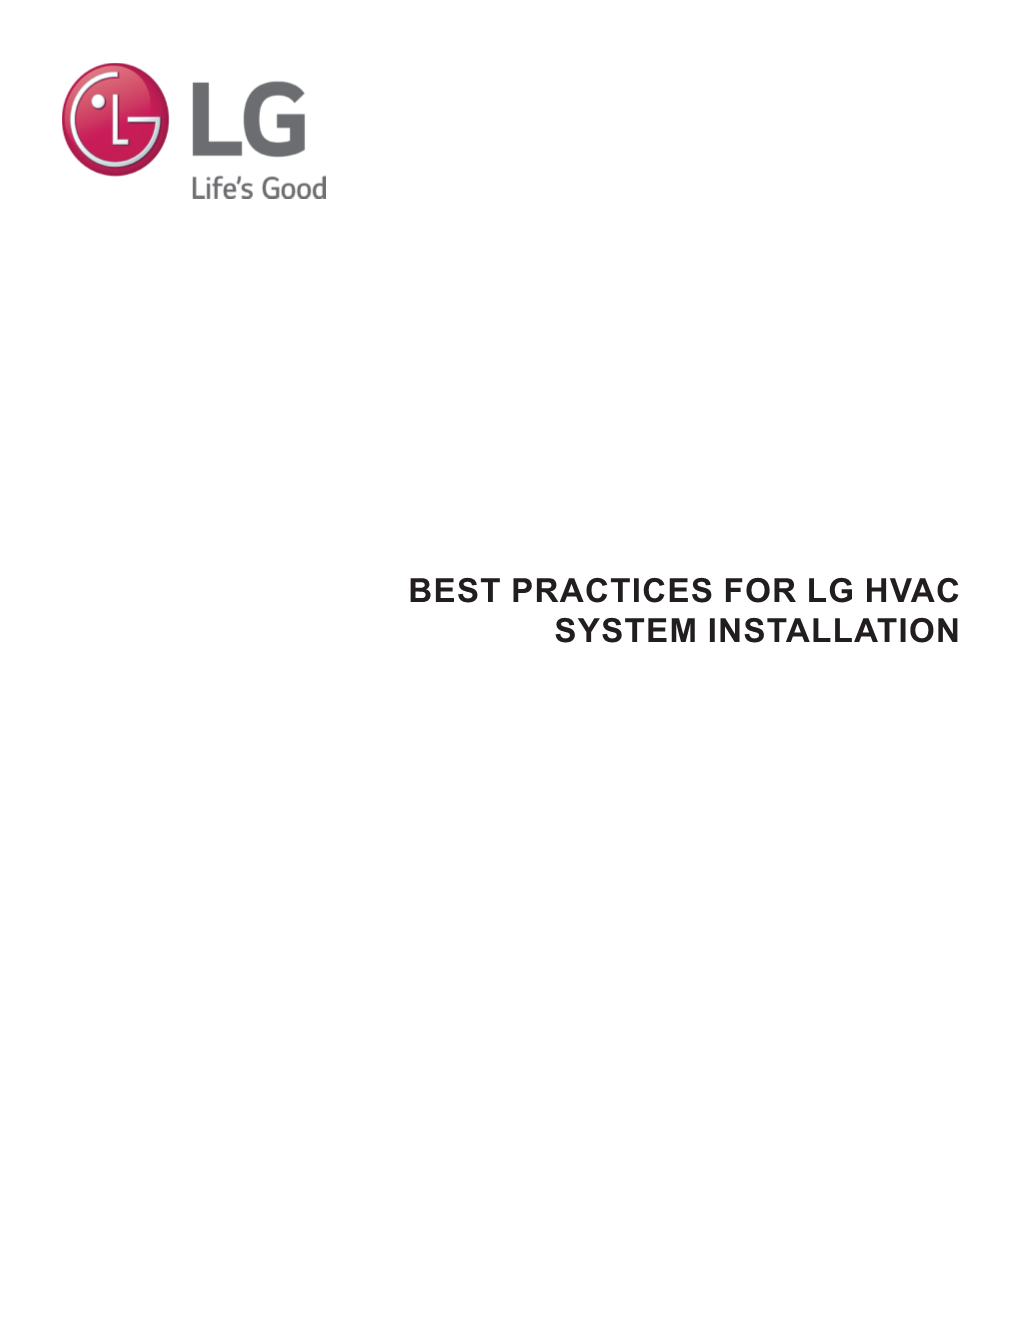 Best Practices for Lg Hvac System Installation